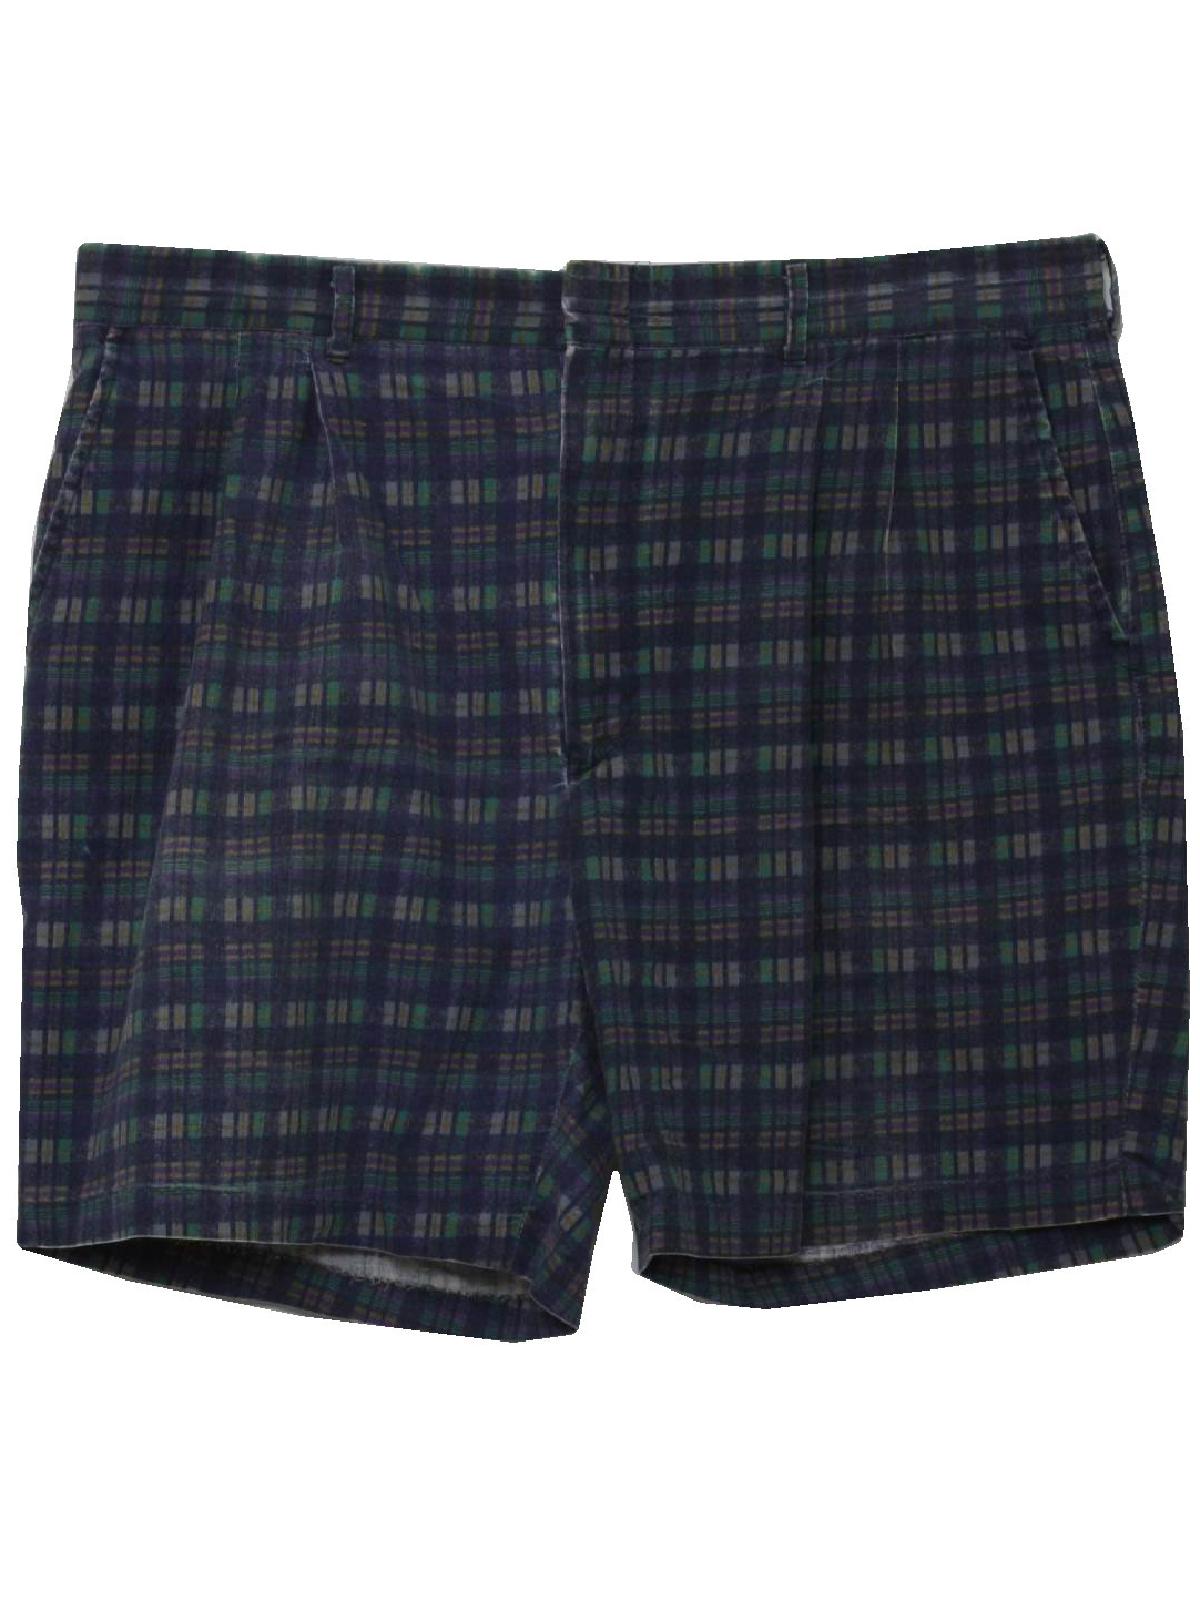 Retro 1980's Shorts (Haband) : 80s -Haband- Mens shaded blue, grey ...